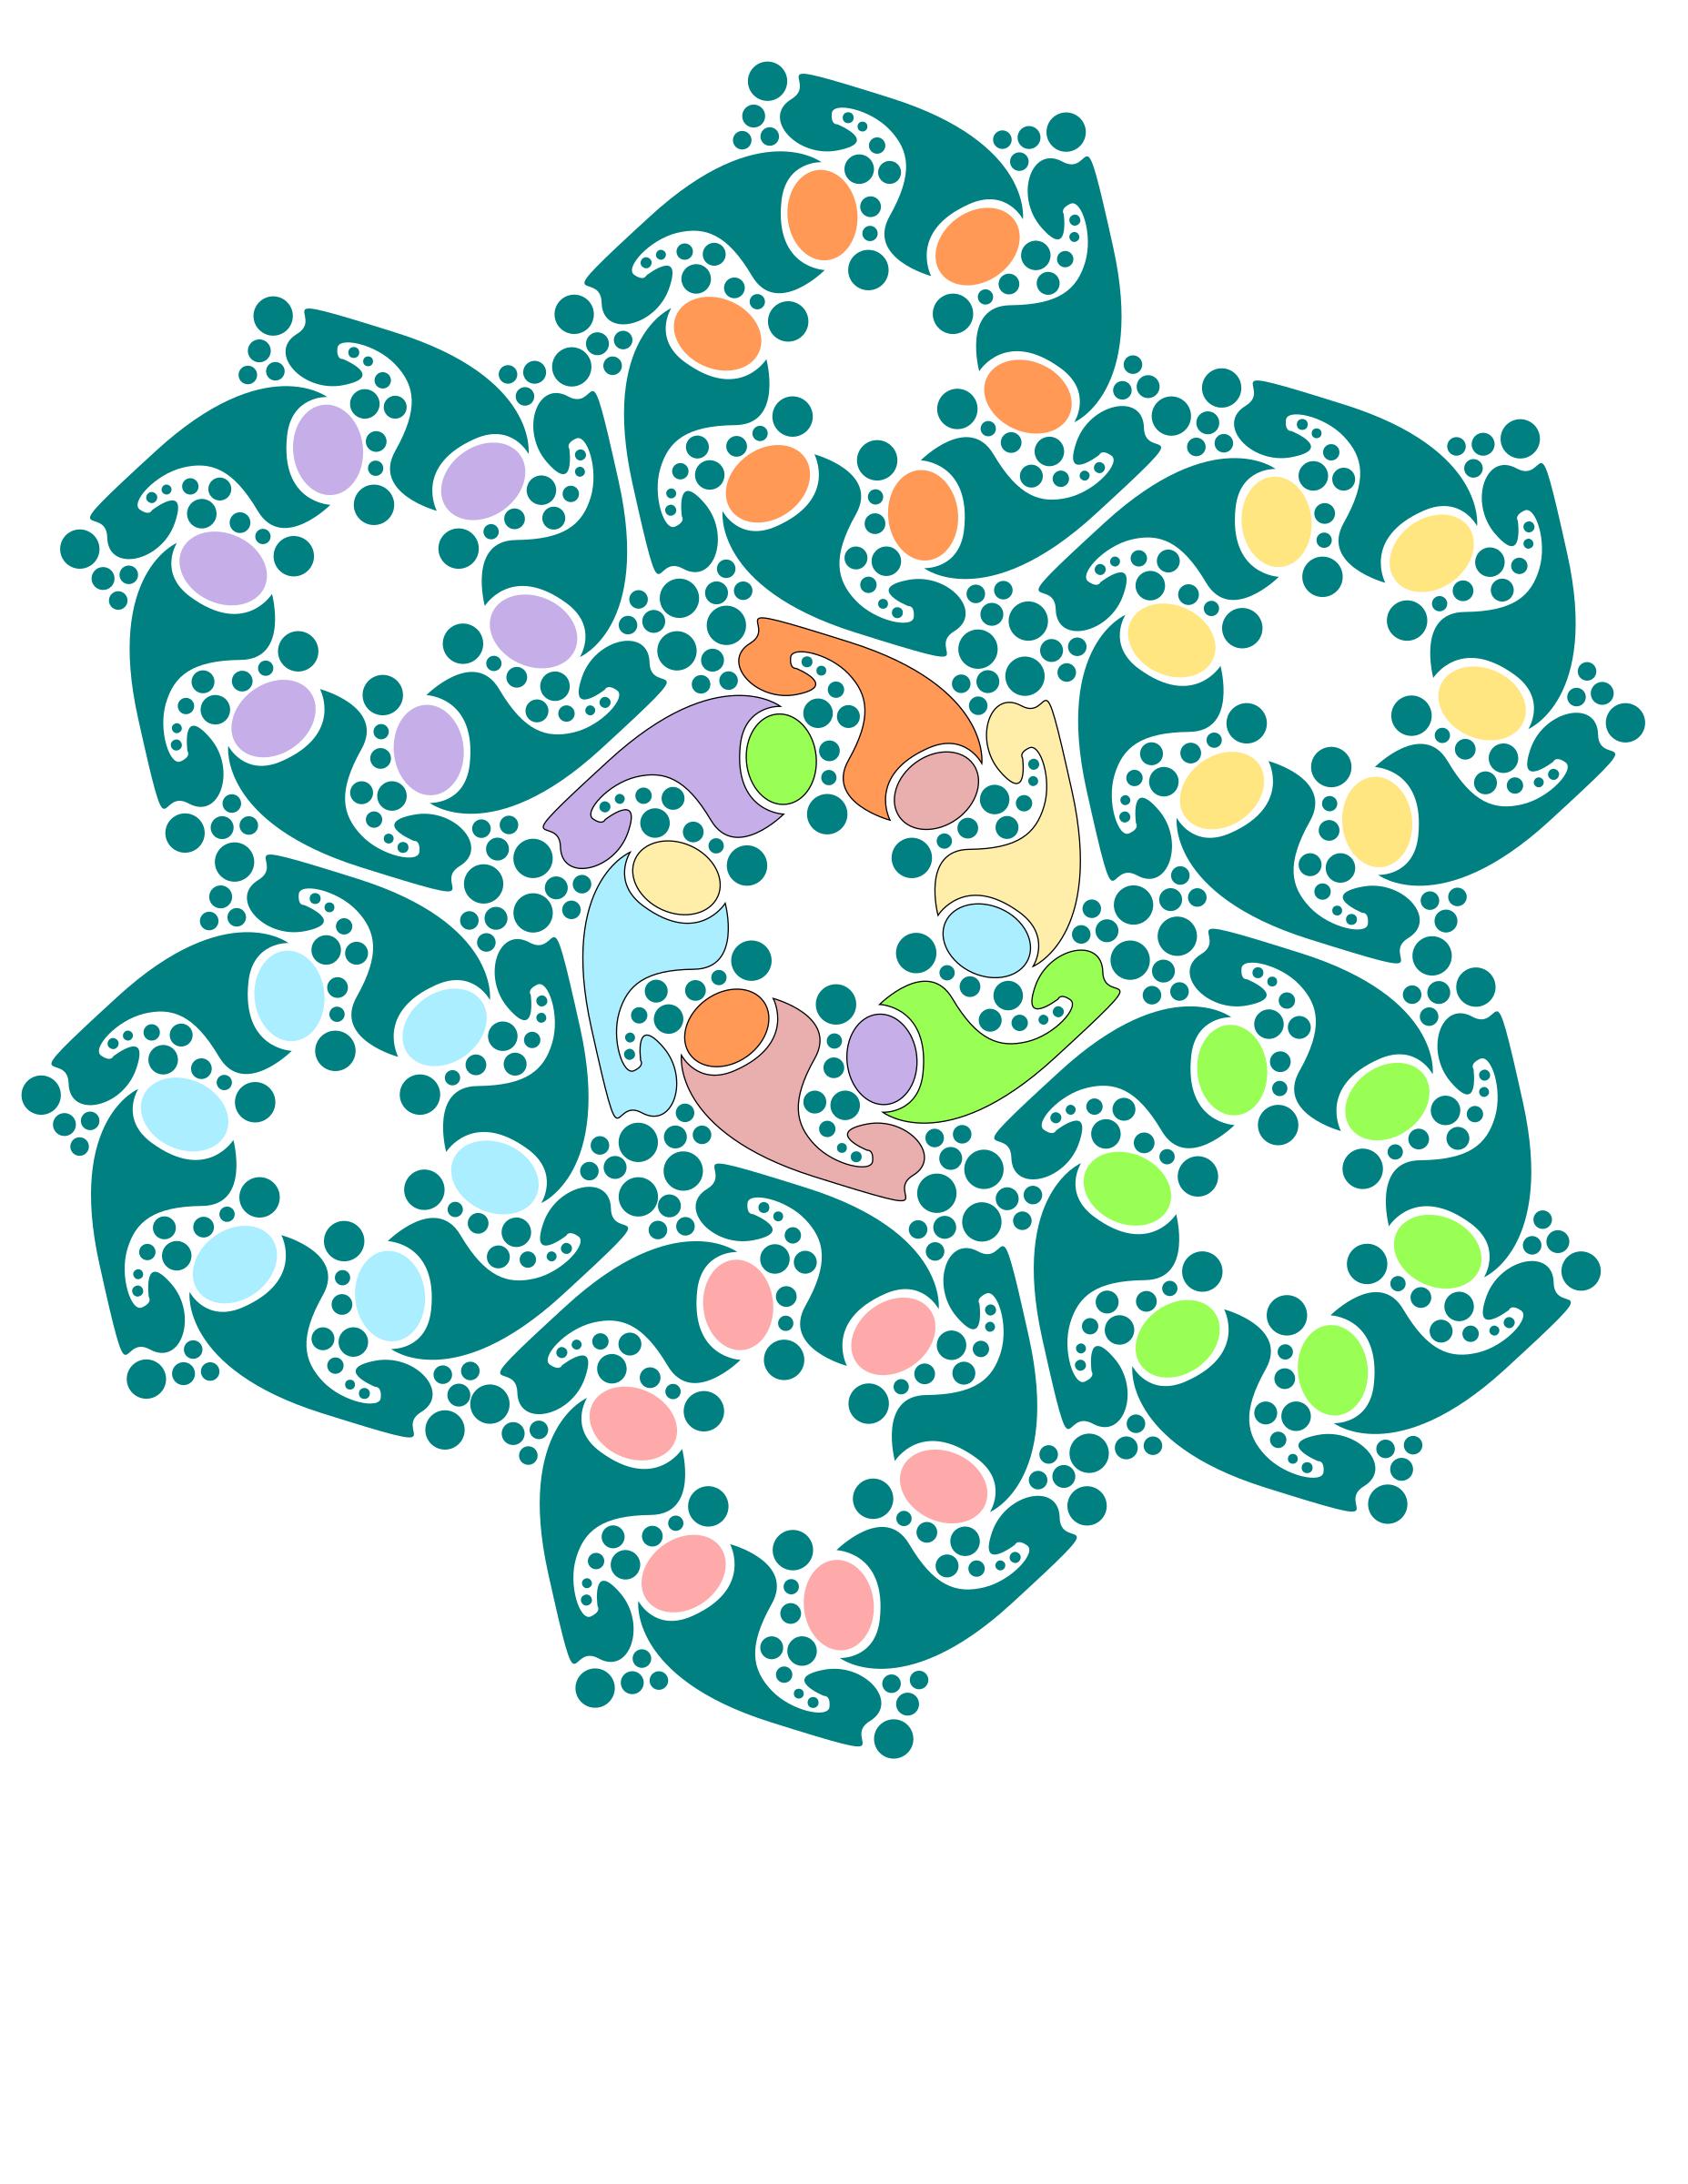 Hexagonal Tesselation Pattern icons